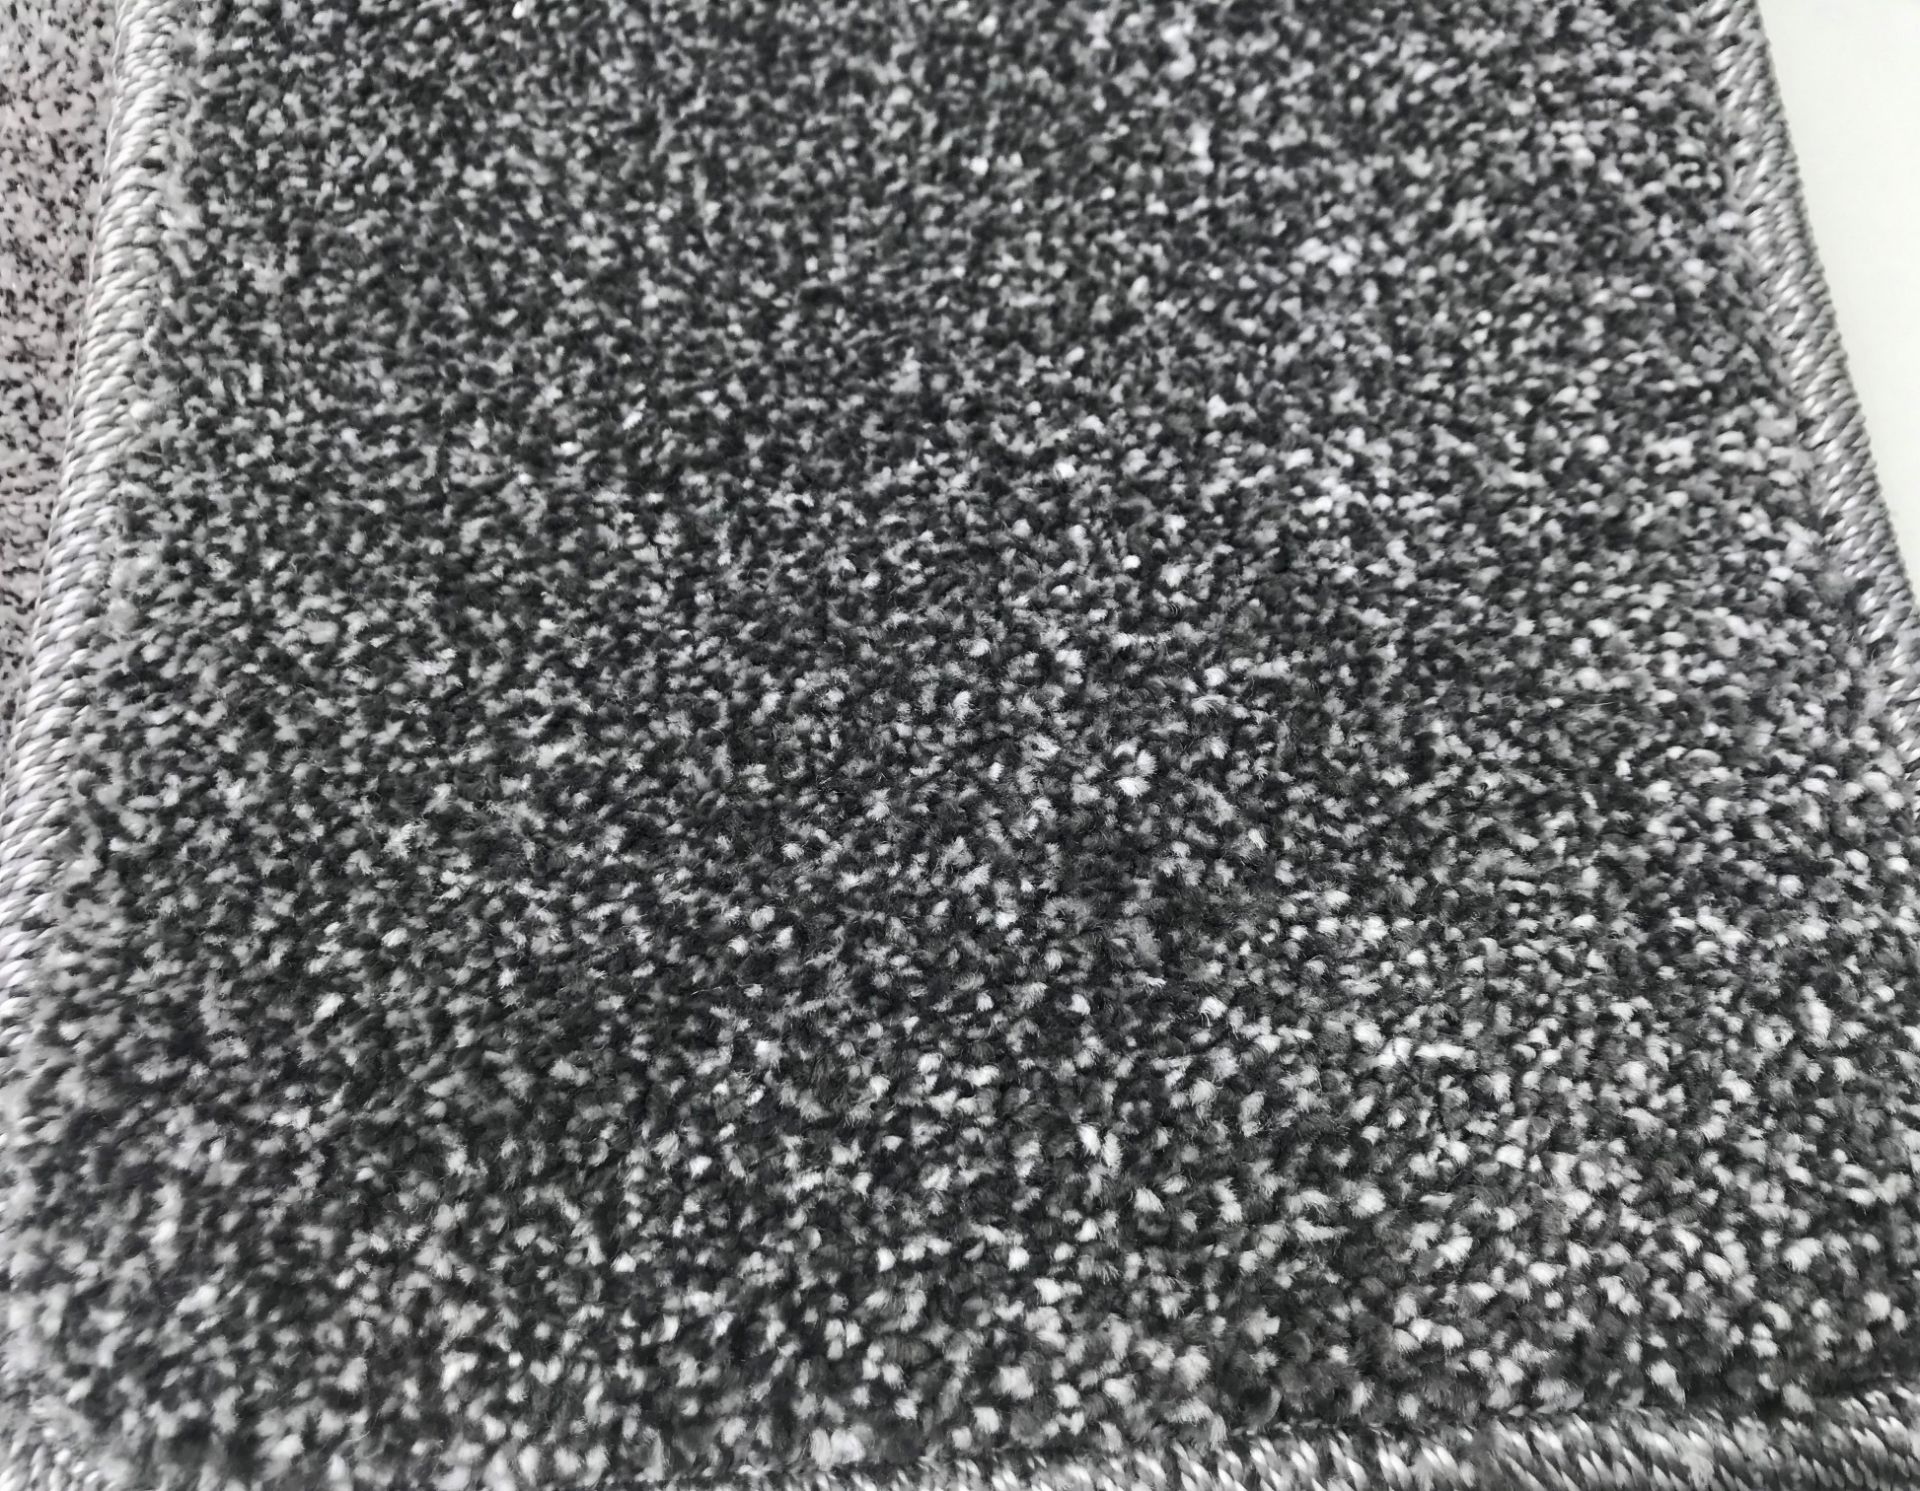 1 x Luxury 50Oz Twist Pile Carpet - Colour Platinum Grey - 25X4 Meter Roll - Rrp £36.99/Sqm - Ref: - Image 5 of 5